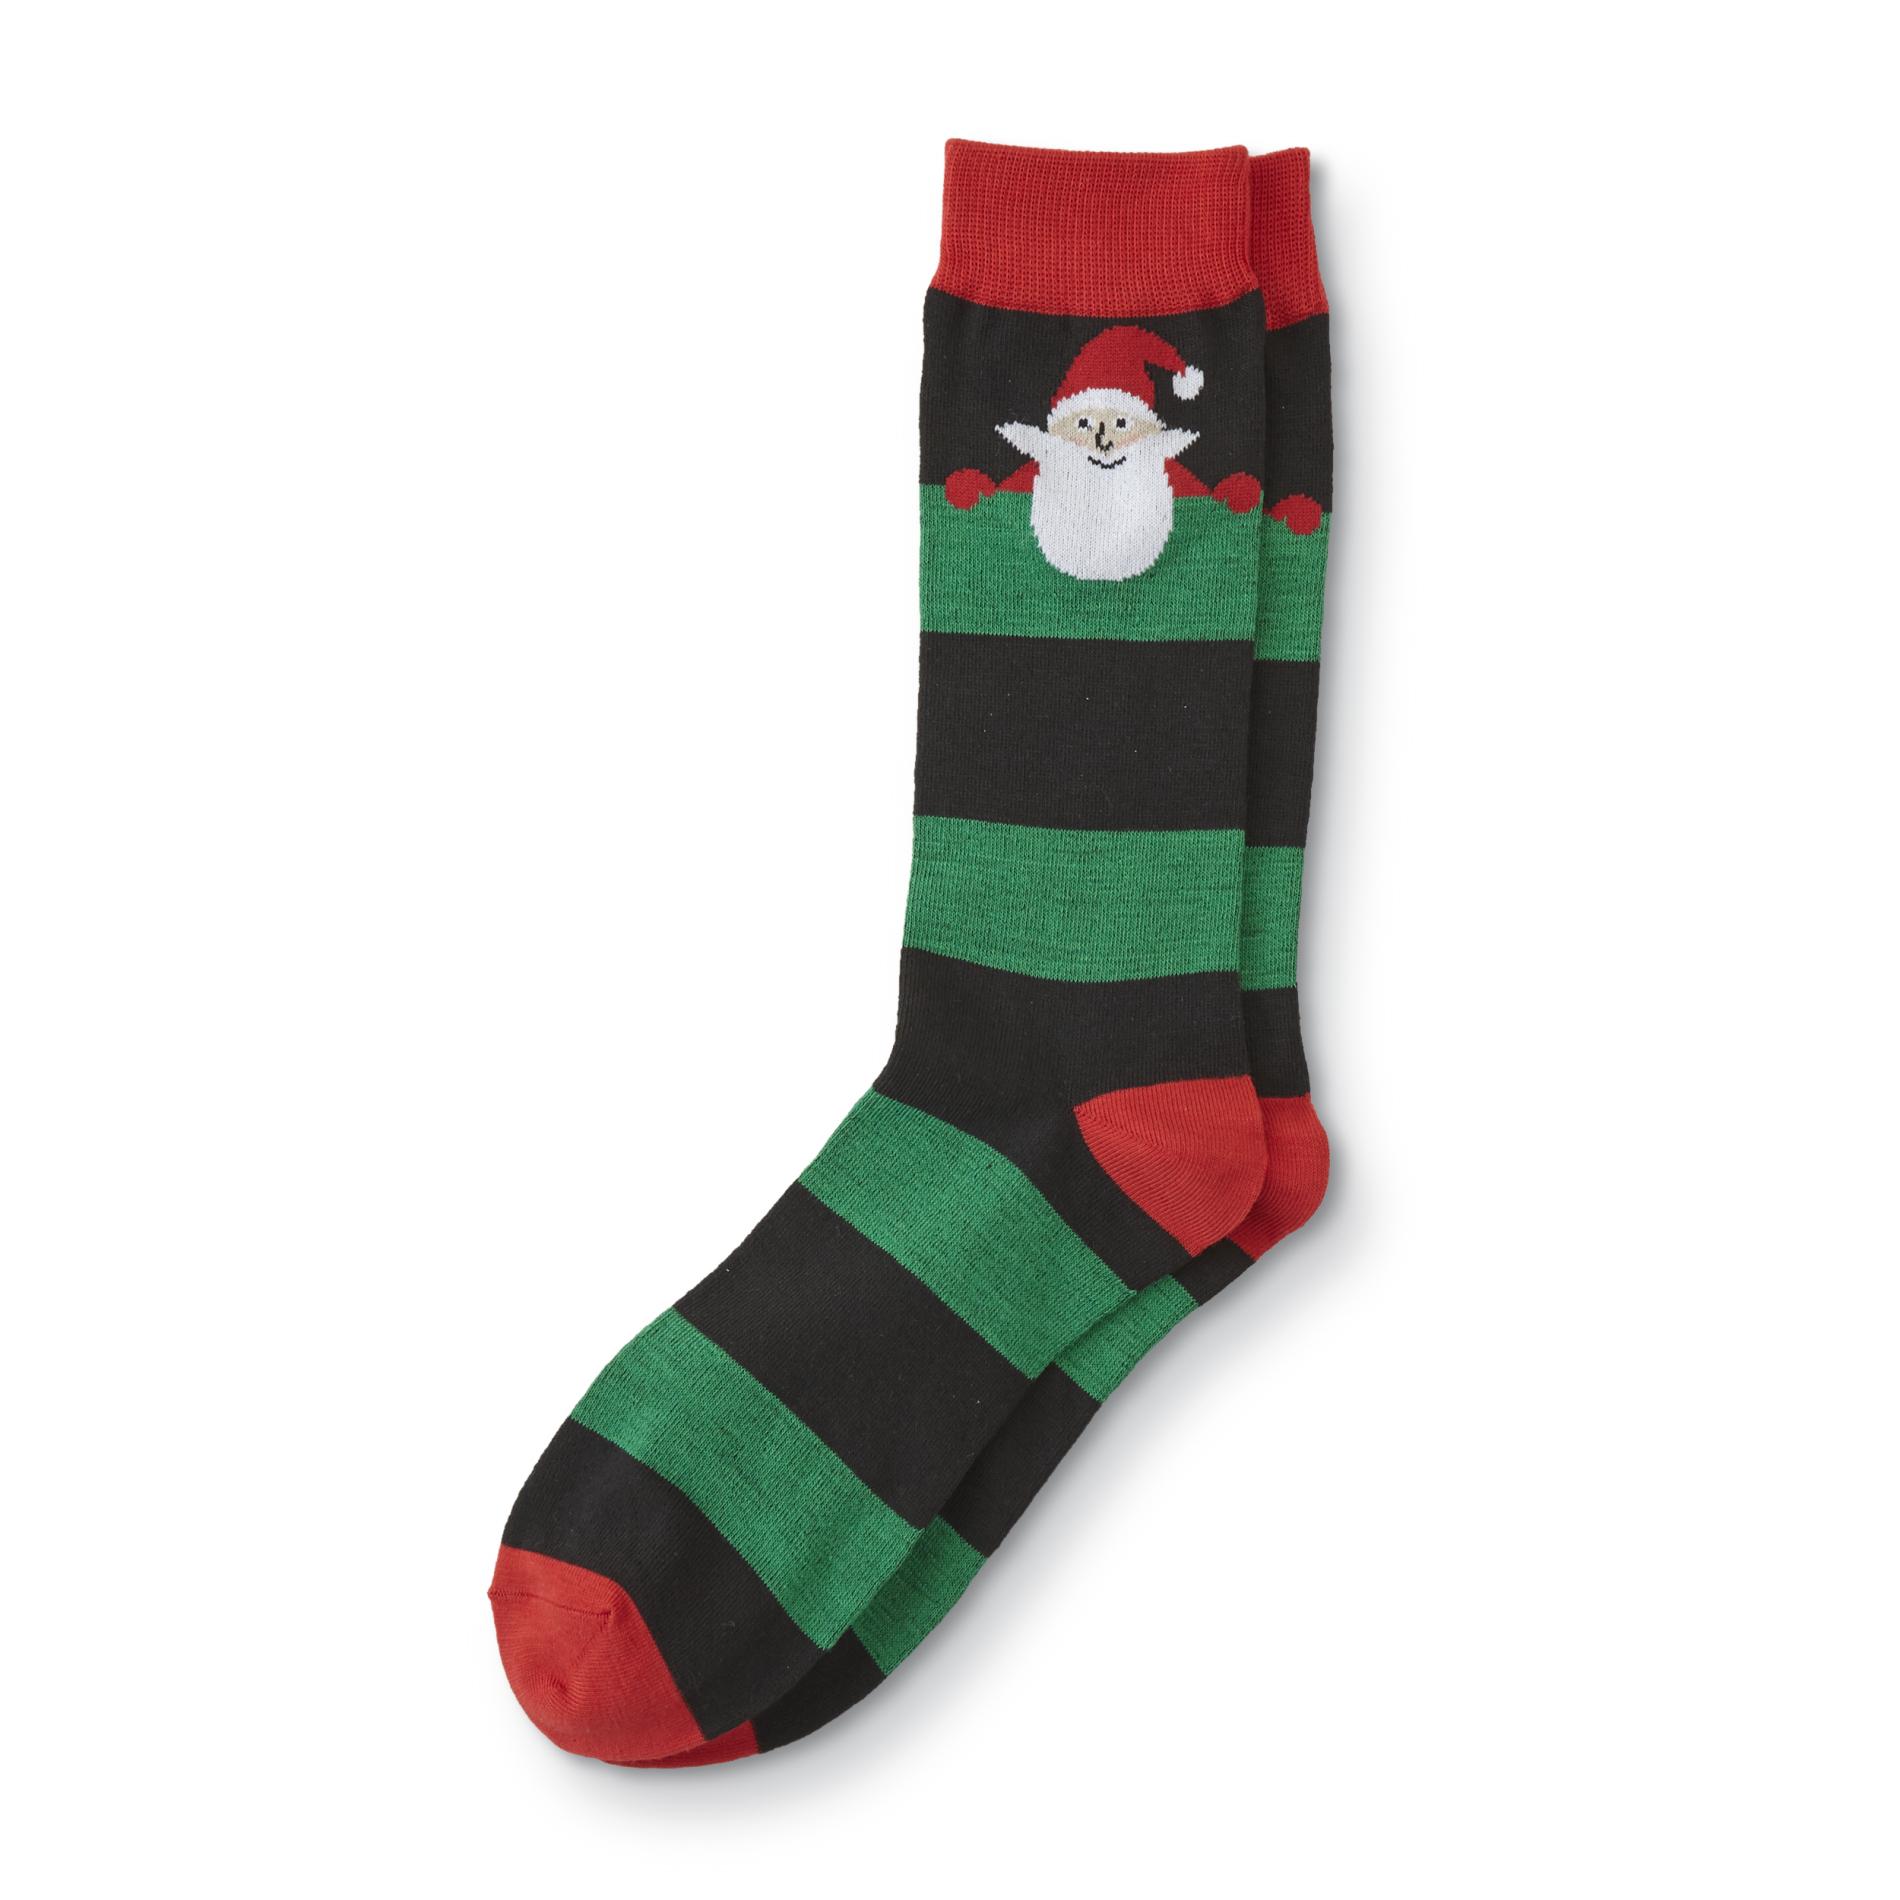 Joe Boxer Men's Christmas Crew Socks - Santa Claus/Striped